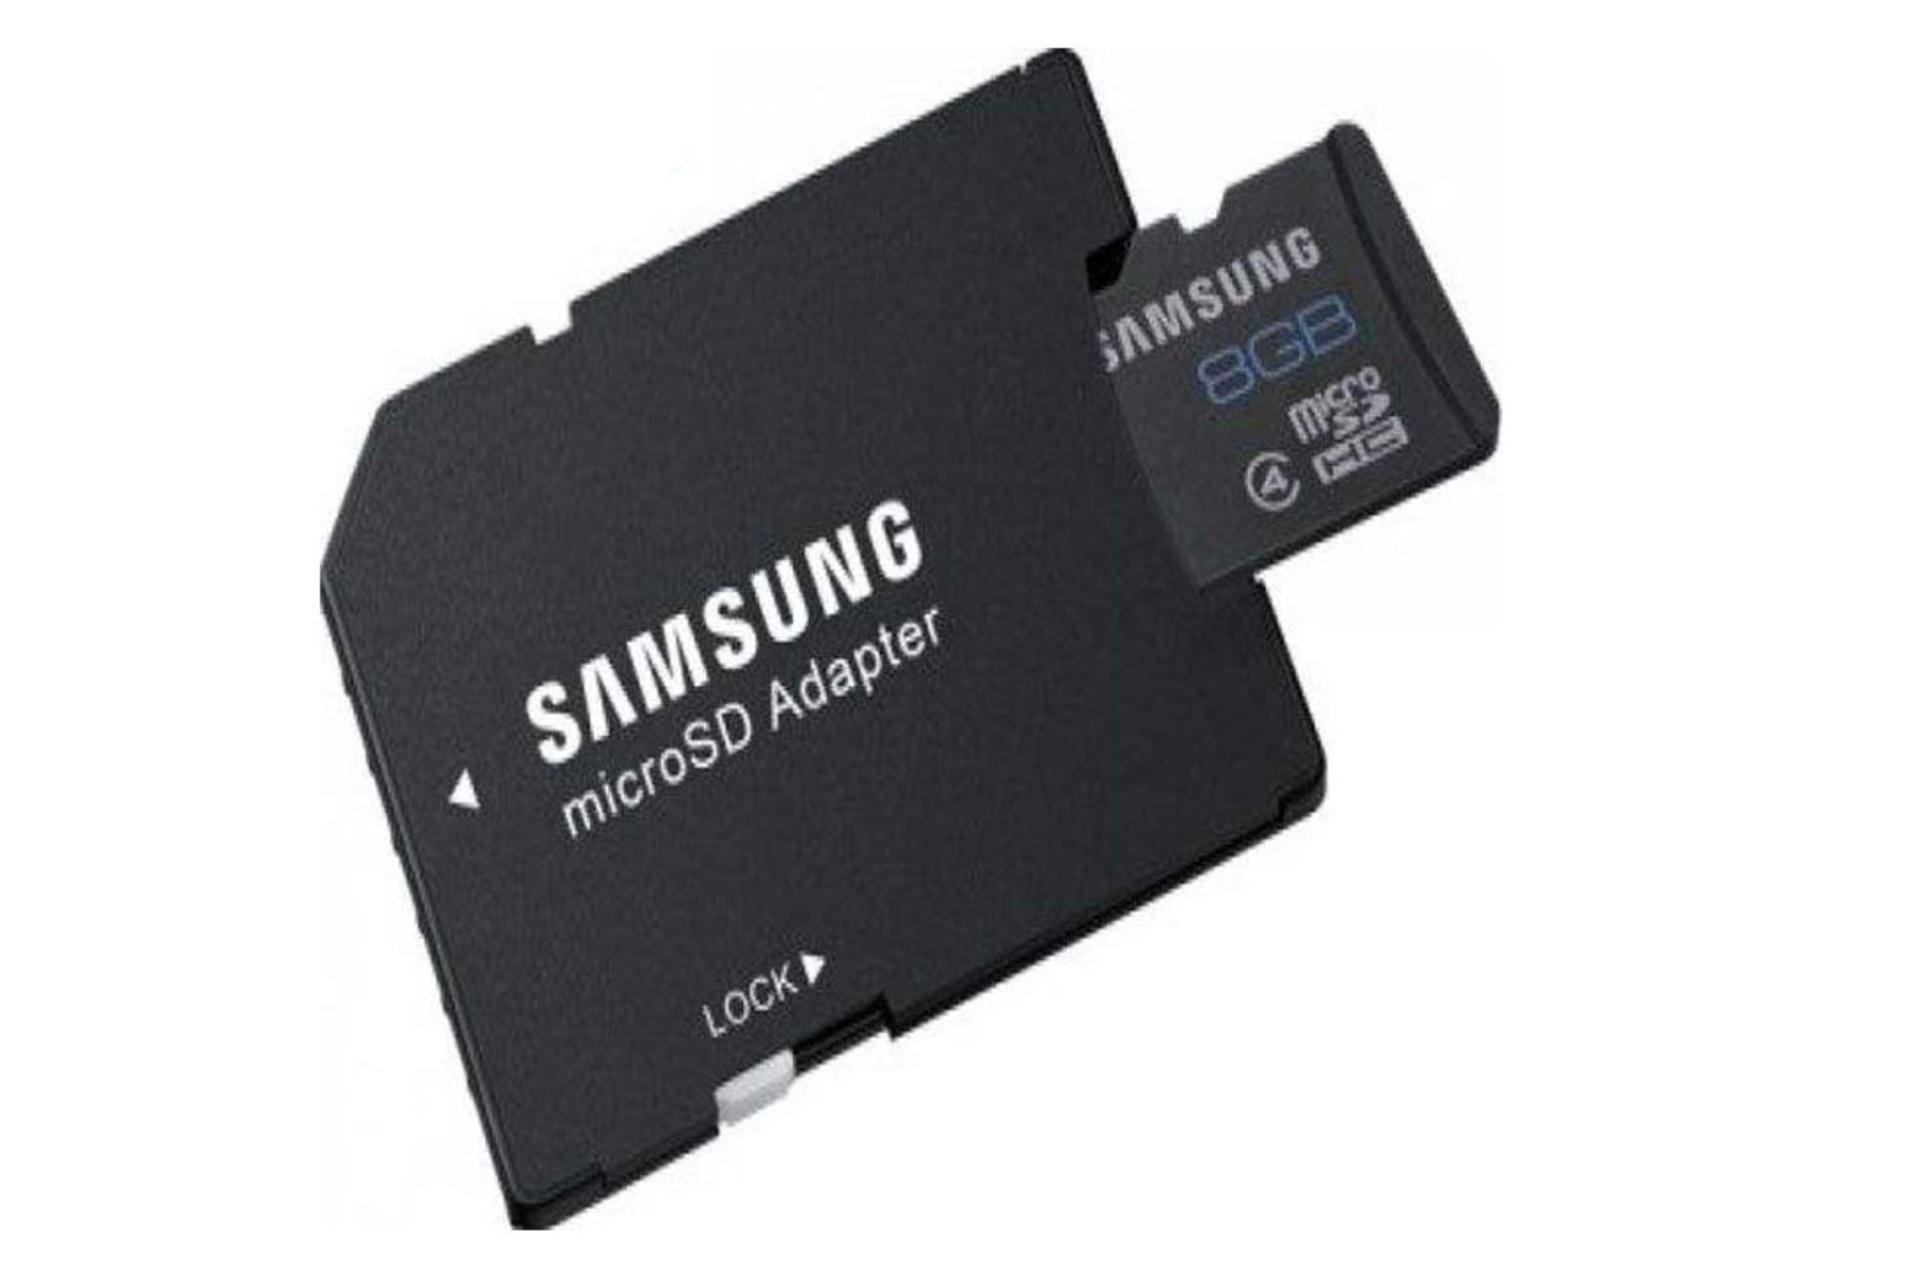 Samsung u microSDHC Class 4 8GB